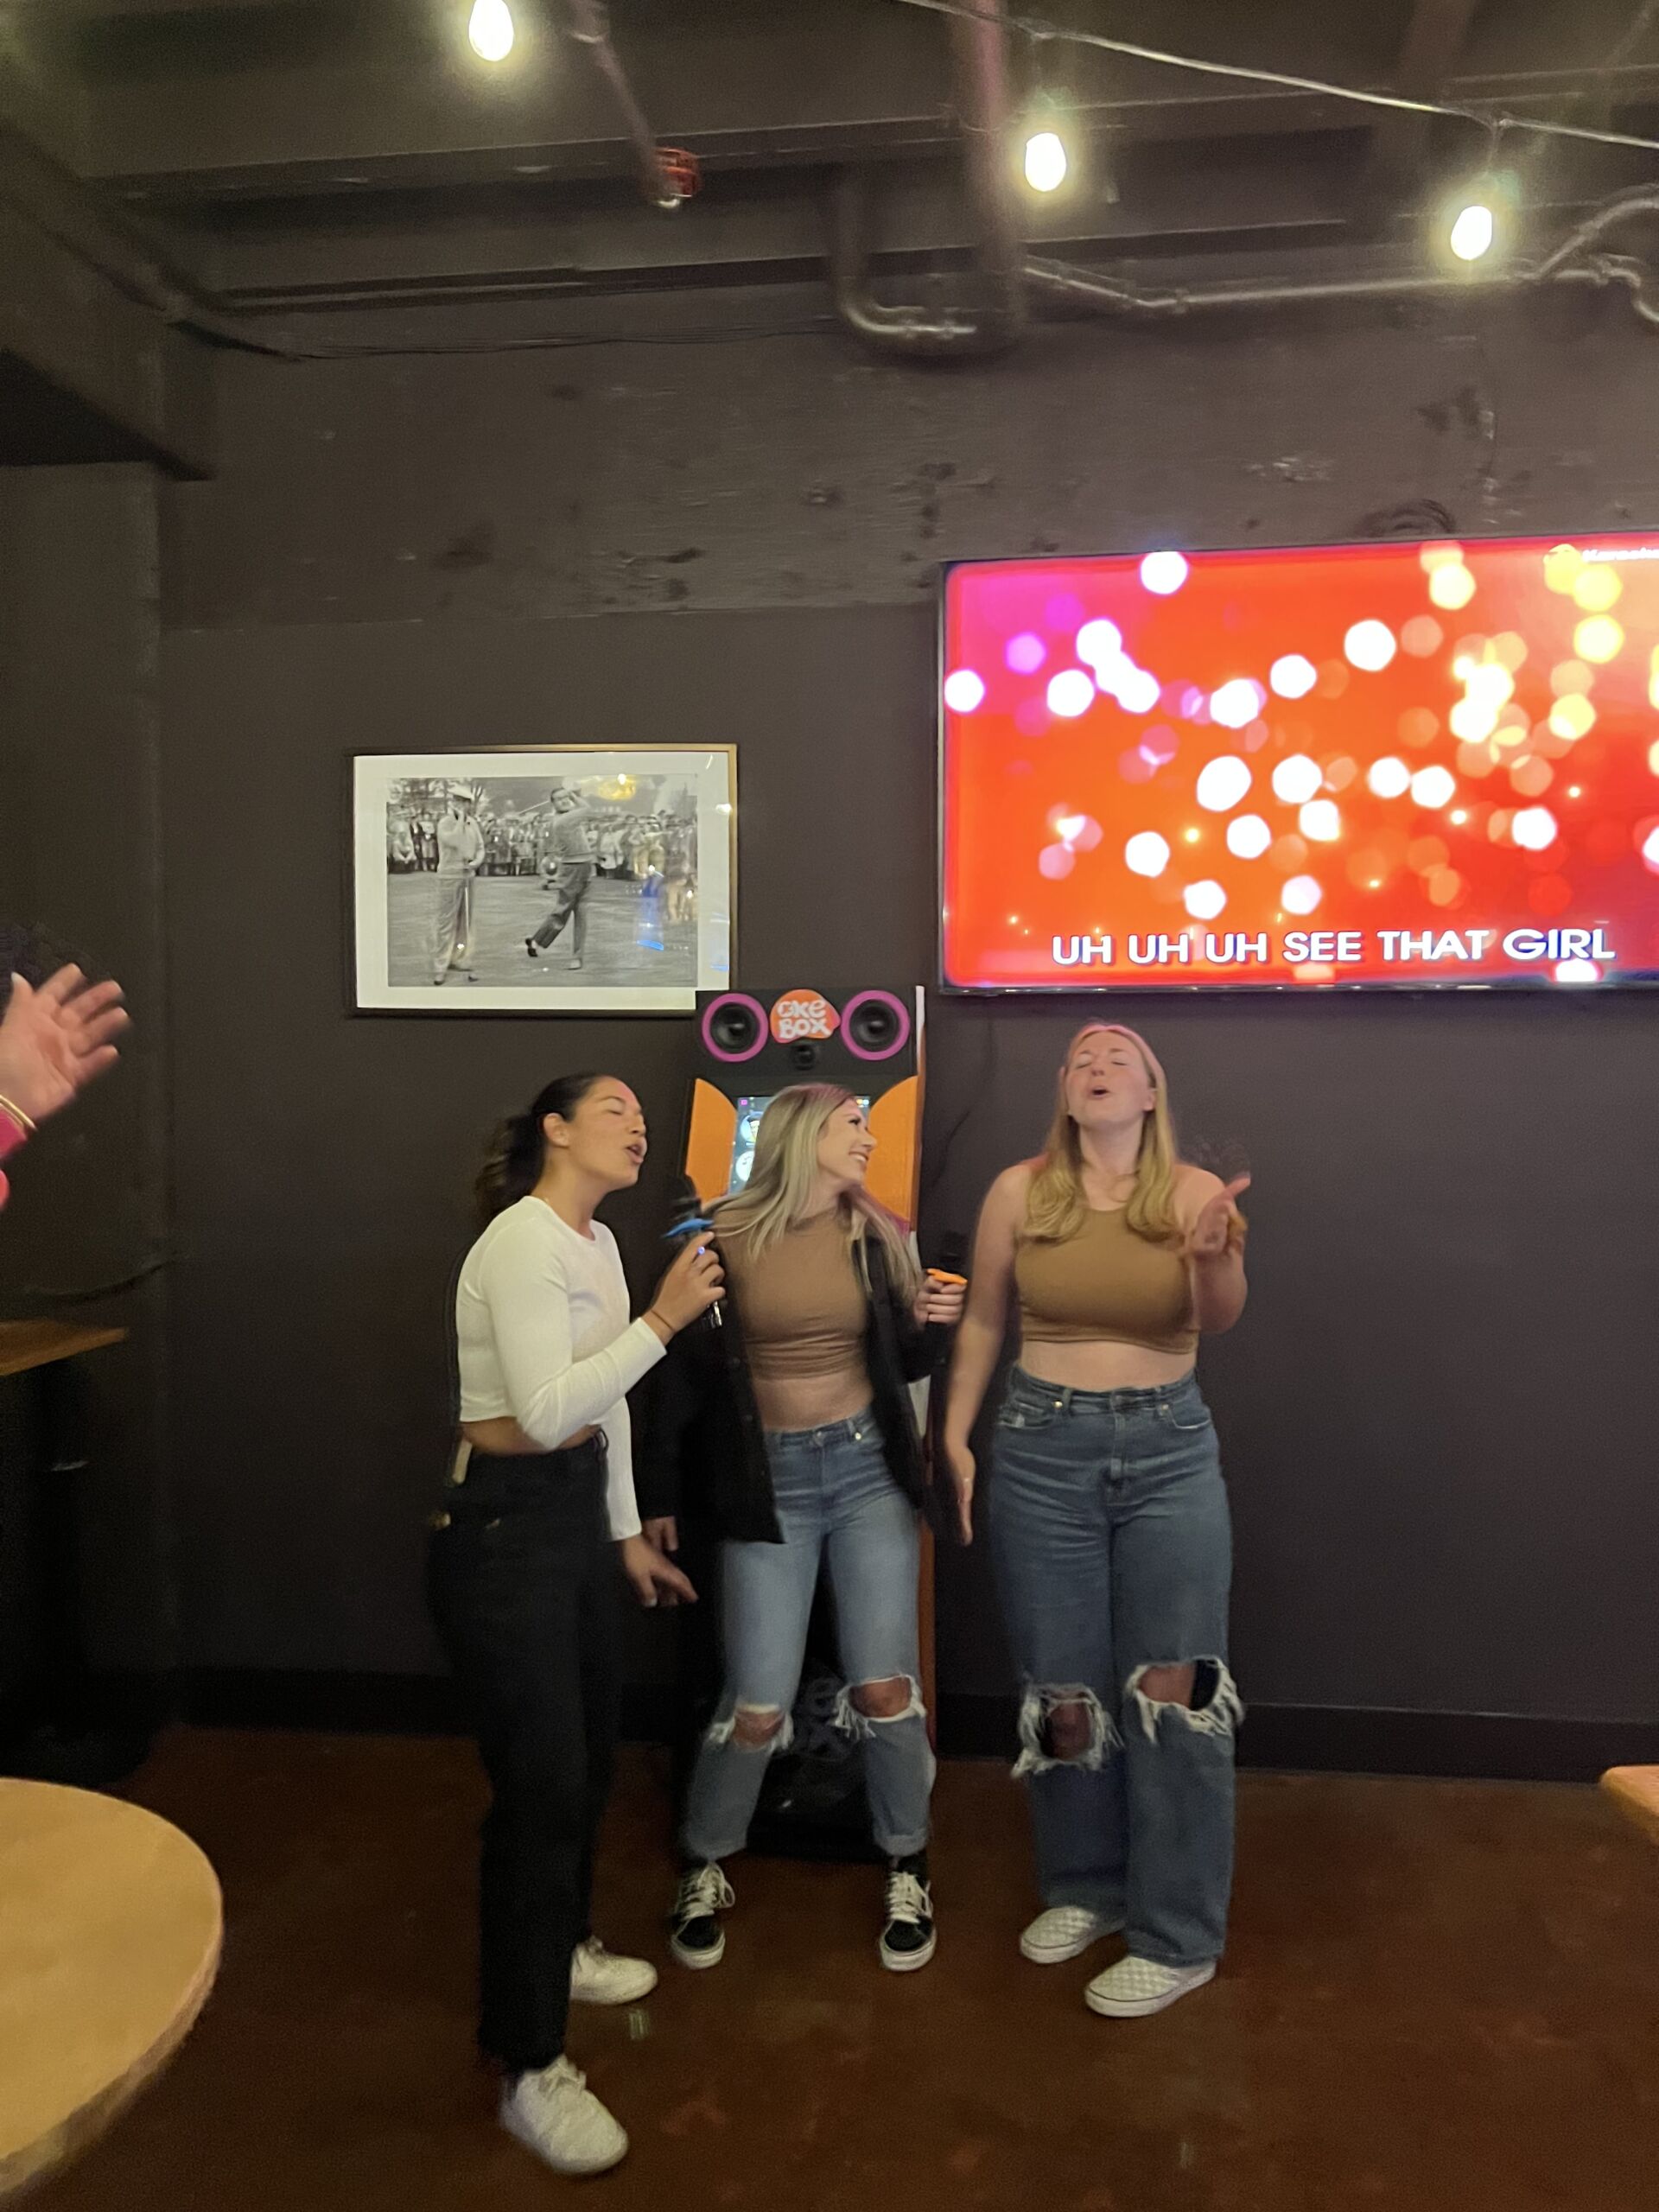 Three girls singing inside a room